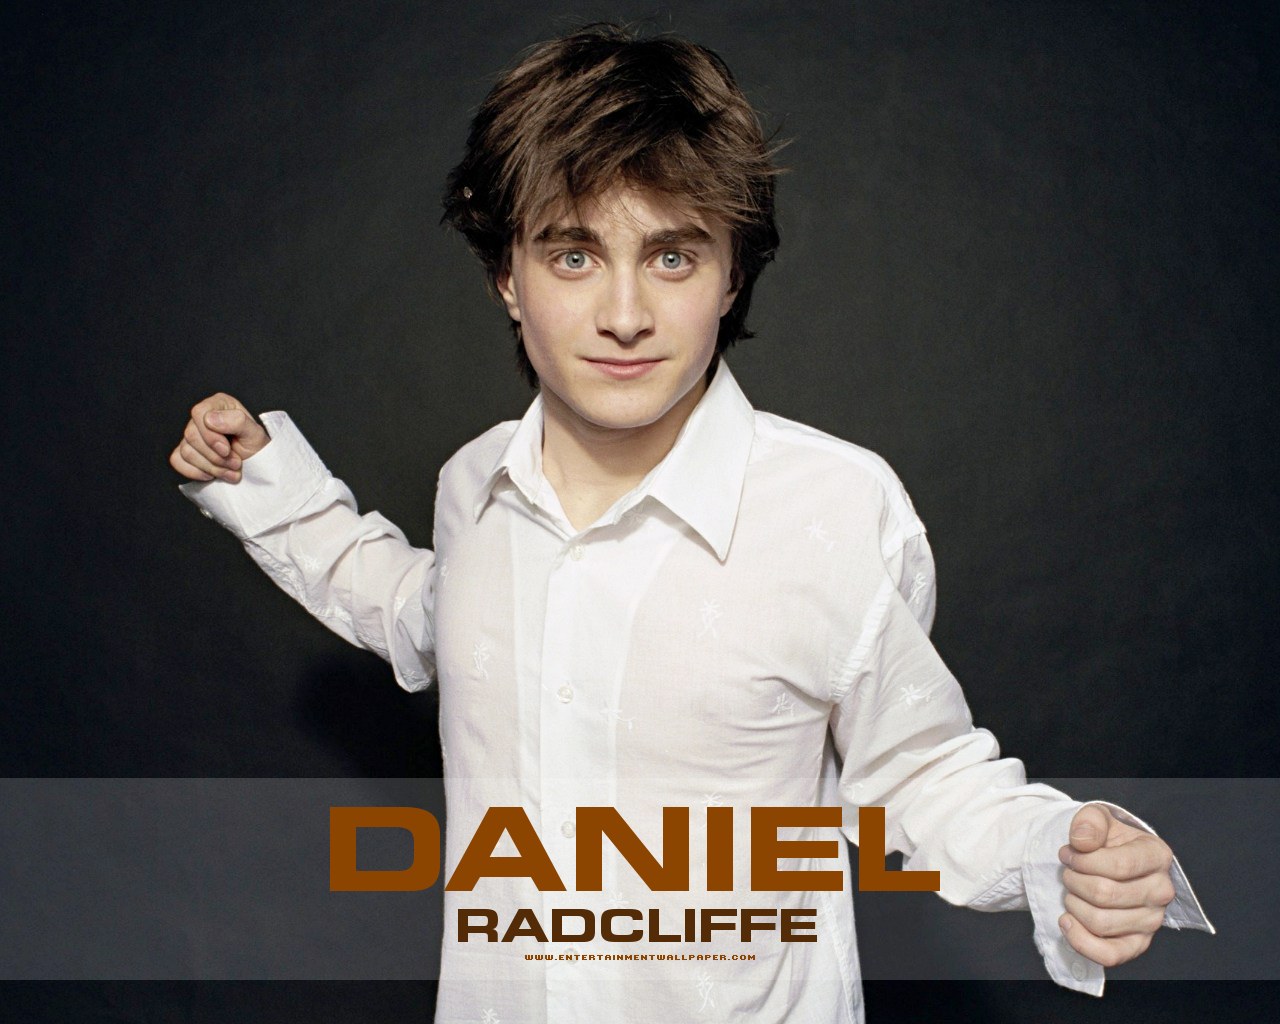 Daniel Radcliffe Wallpaper - #30011457 (1280x1024) | Desktop ...